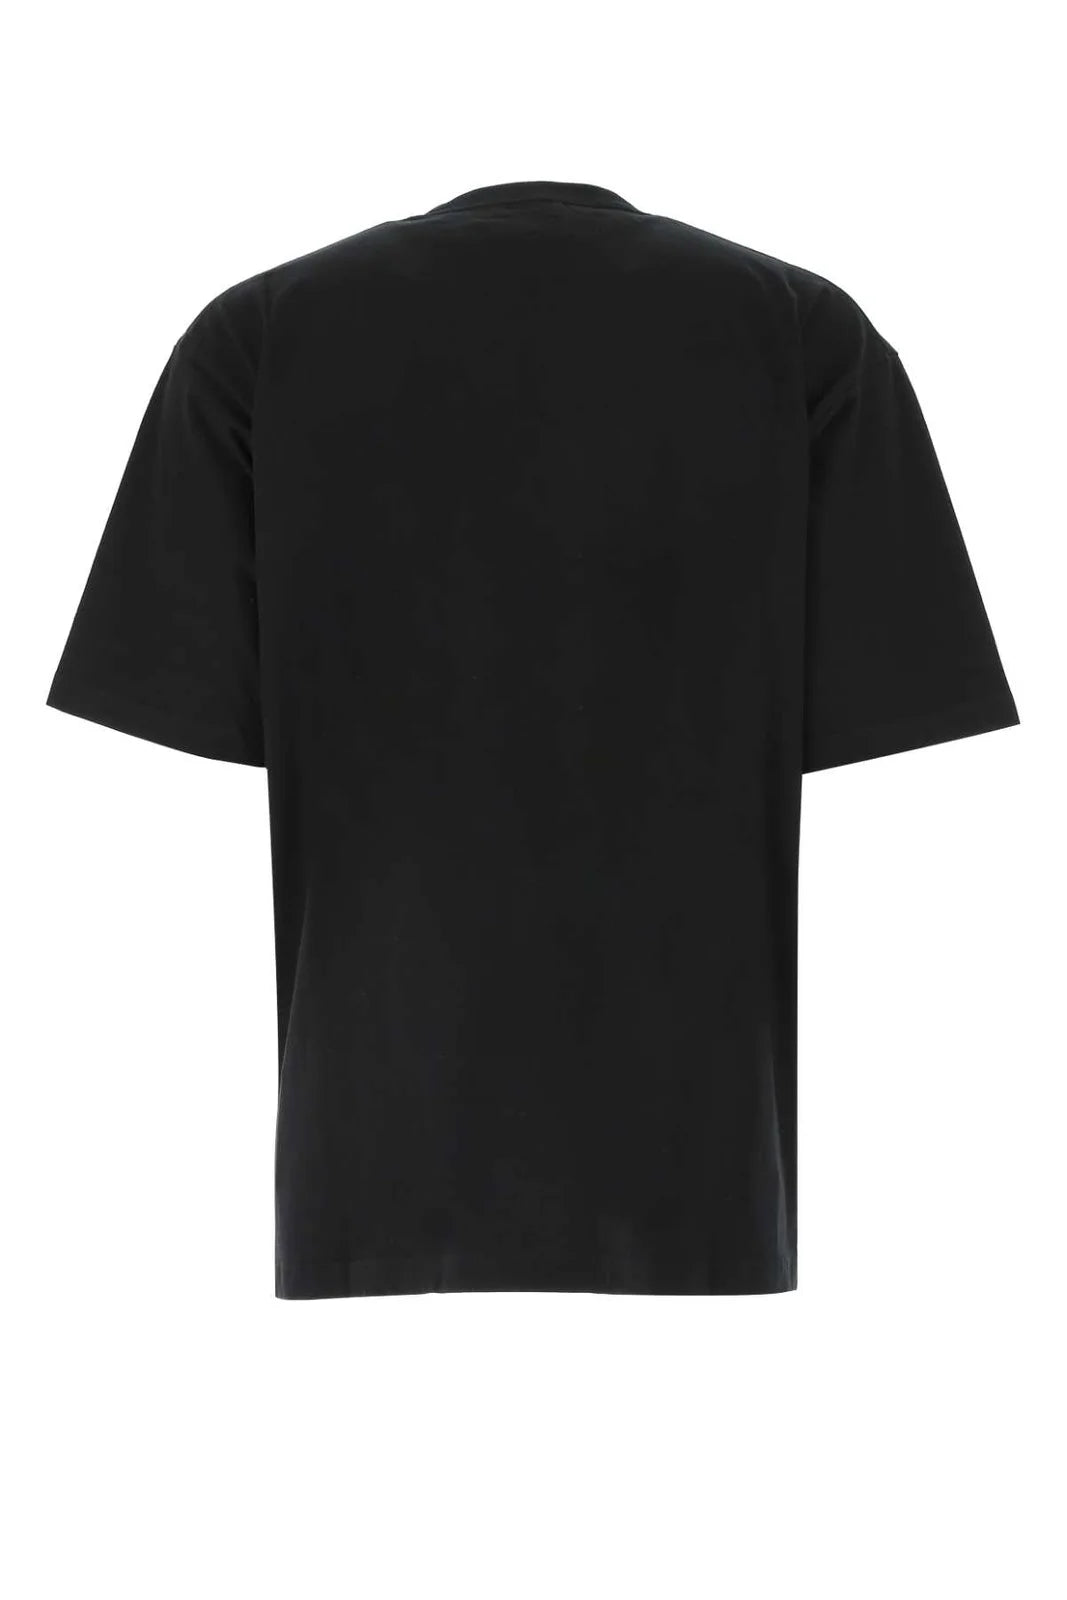 Balenciaga Balenciaga Gym Wear Oversized T-Shirt